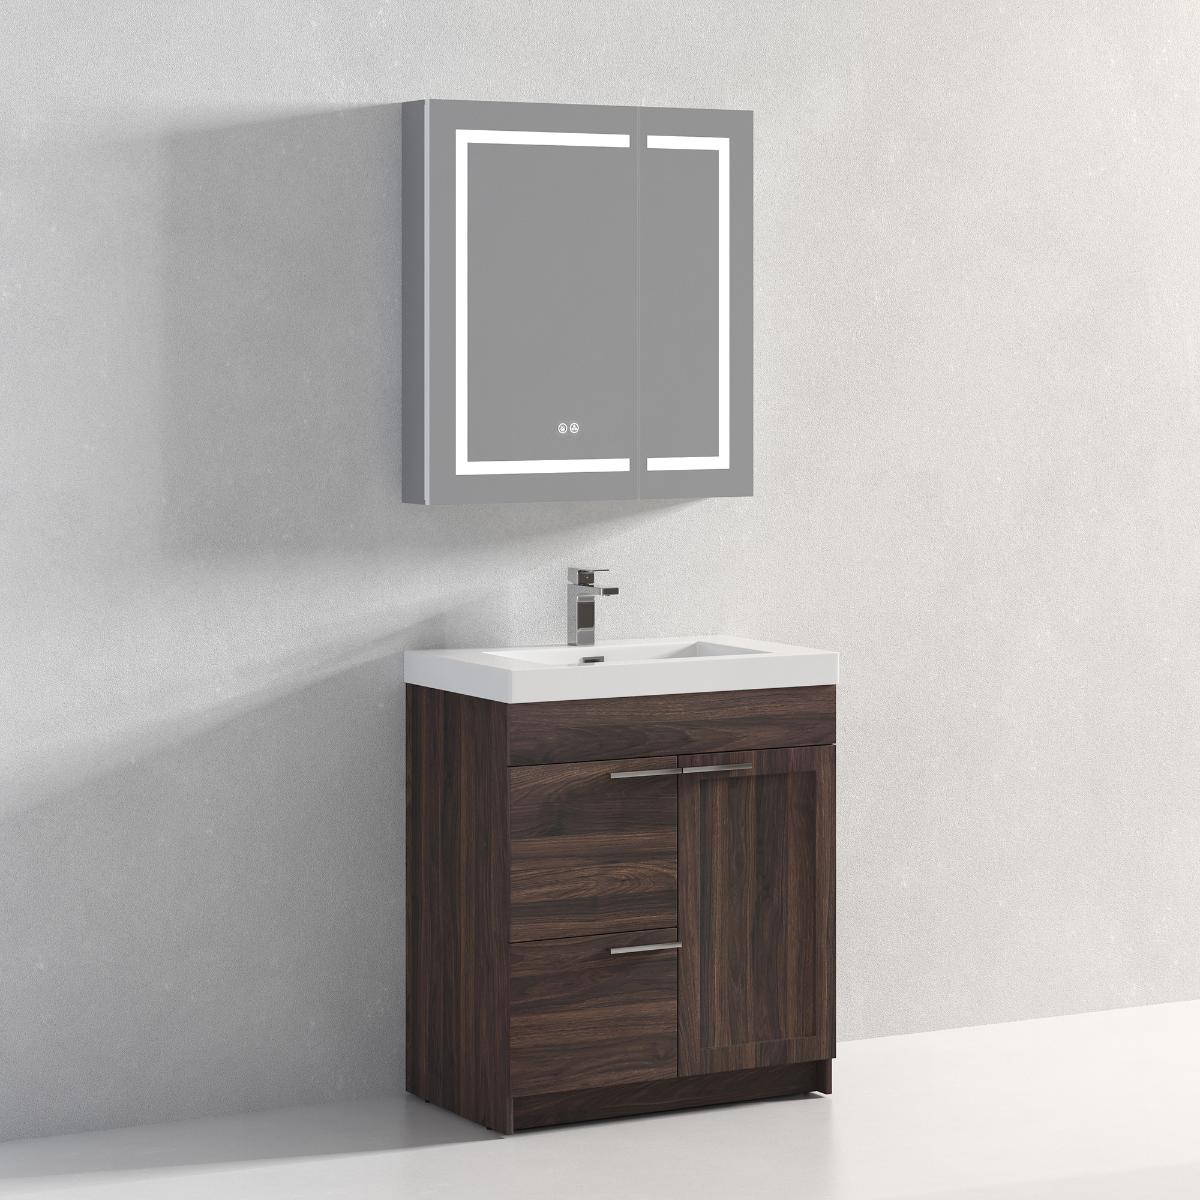 Hanover 30" Bathroom Vanity  #size_30"  #color_cali walnut